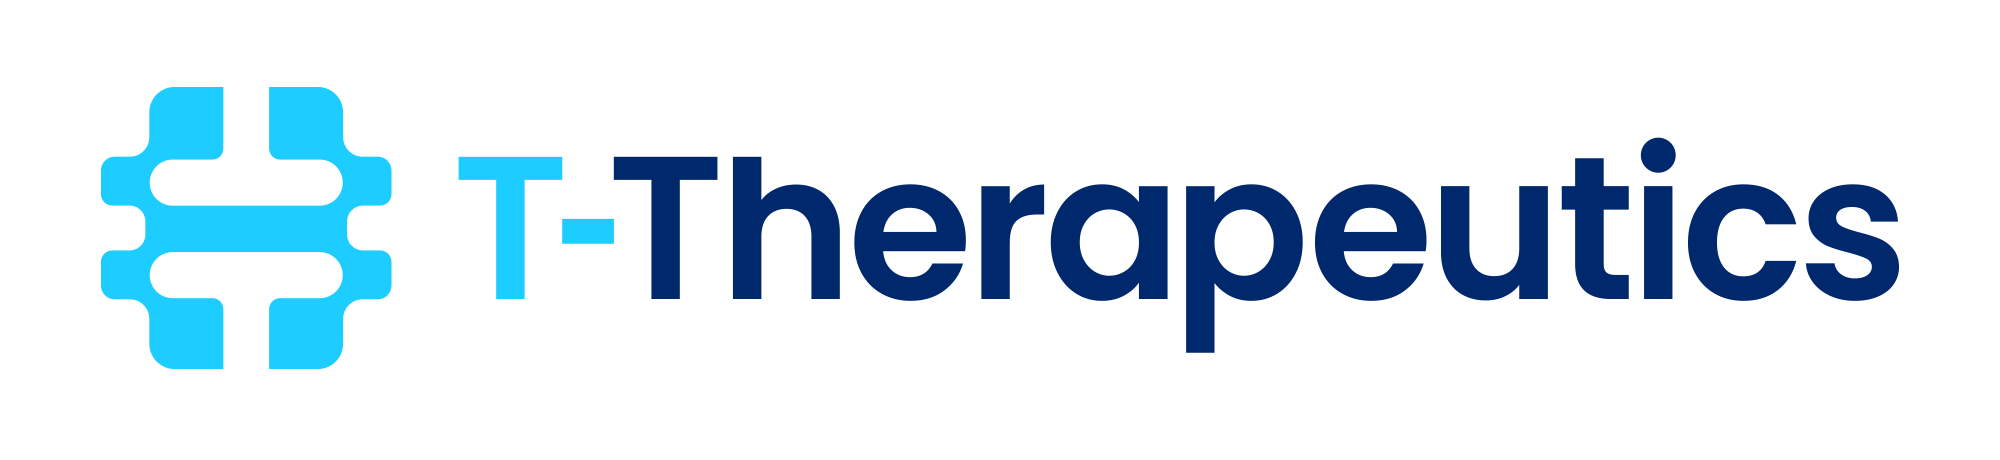 t-therapeutics_logo.png